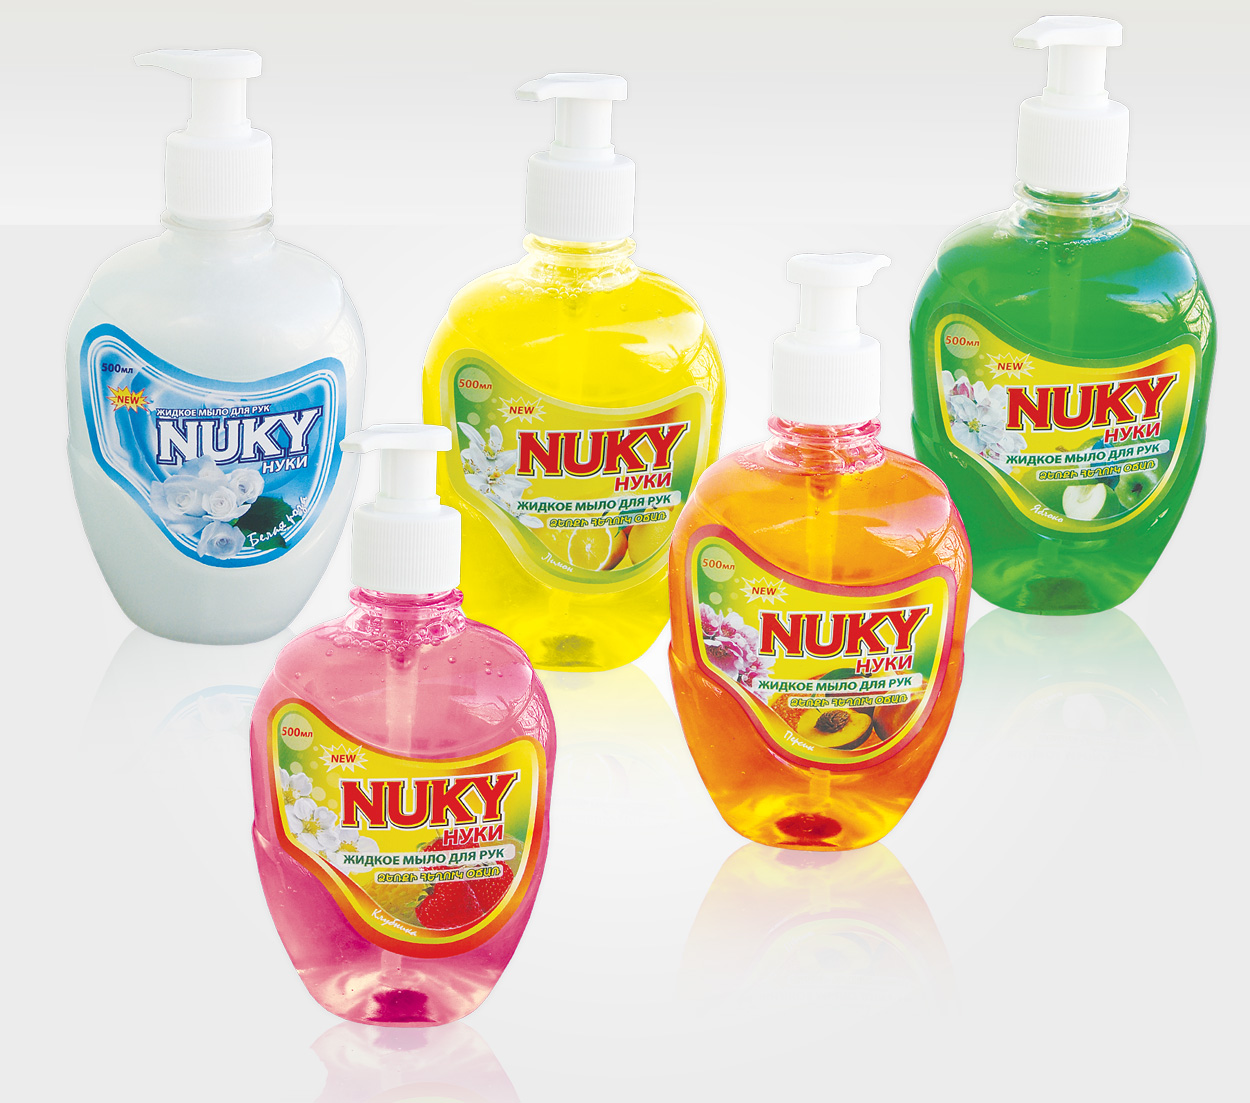 Nuky-Liquid Soap / Dishwashing Liquid / Glass Cleaner: Label Design